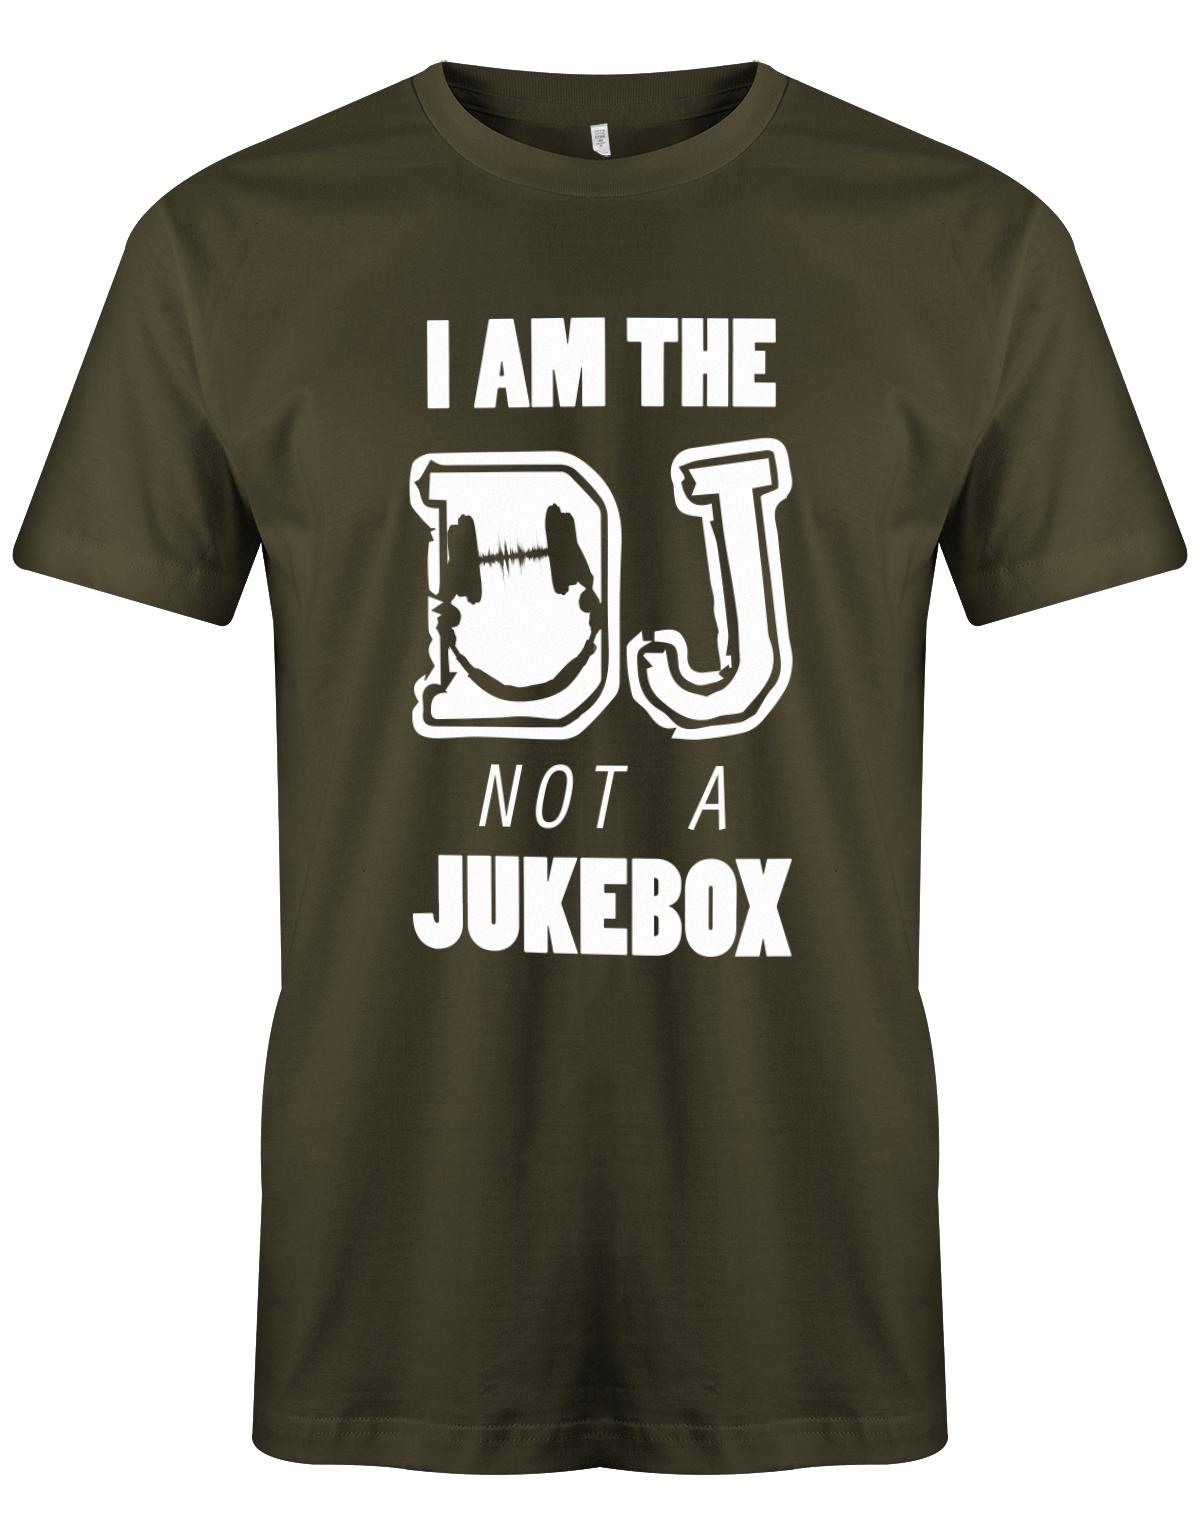 I-am-the-DJ-not-a-JUkebox-Herren-Army